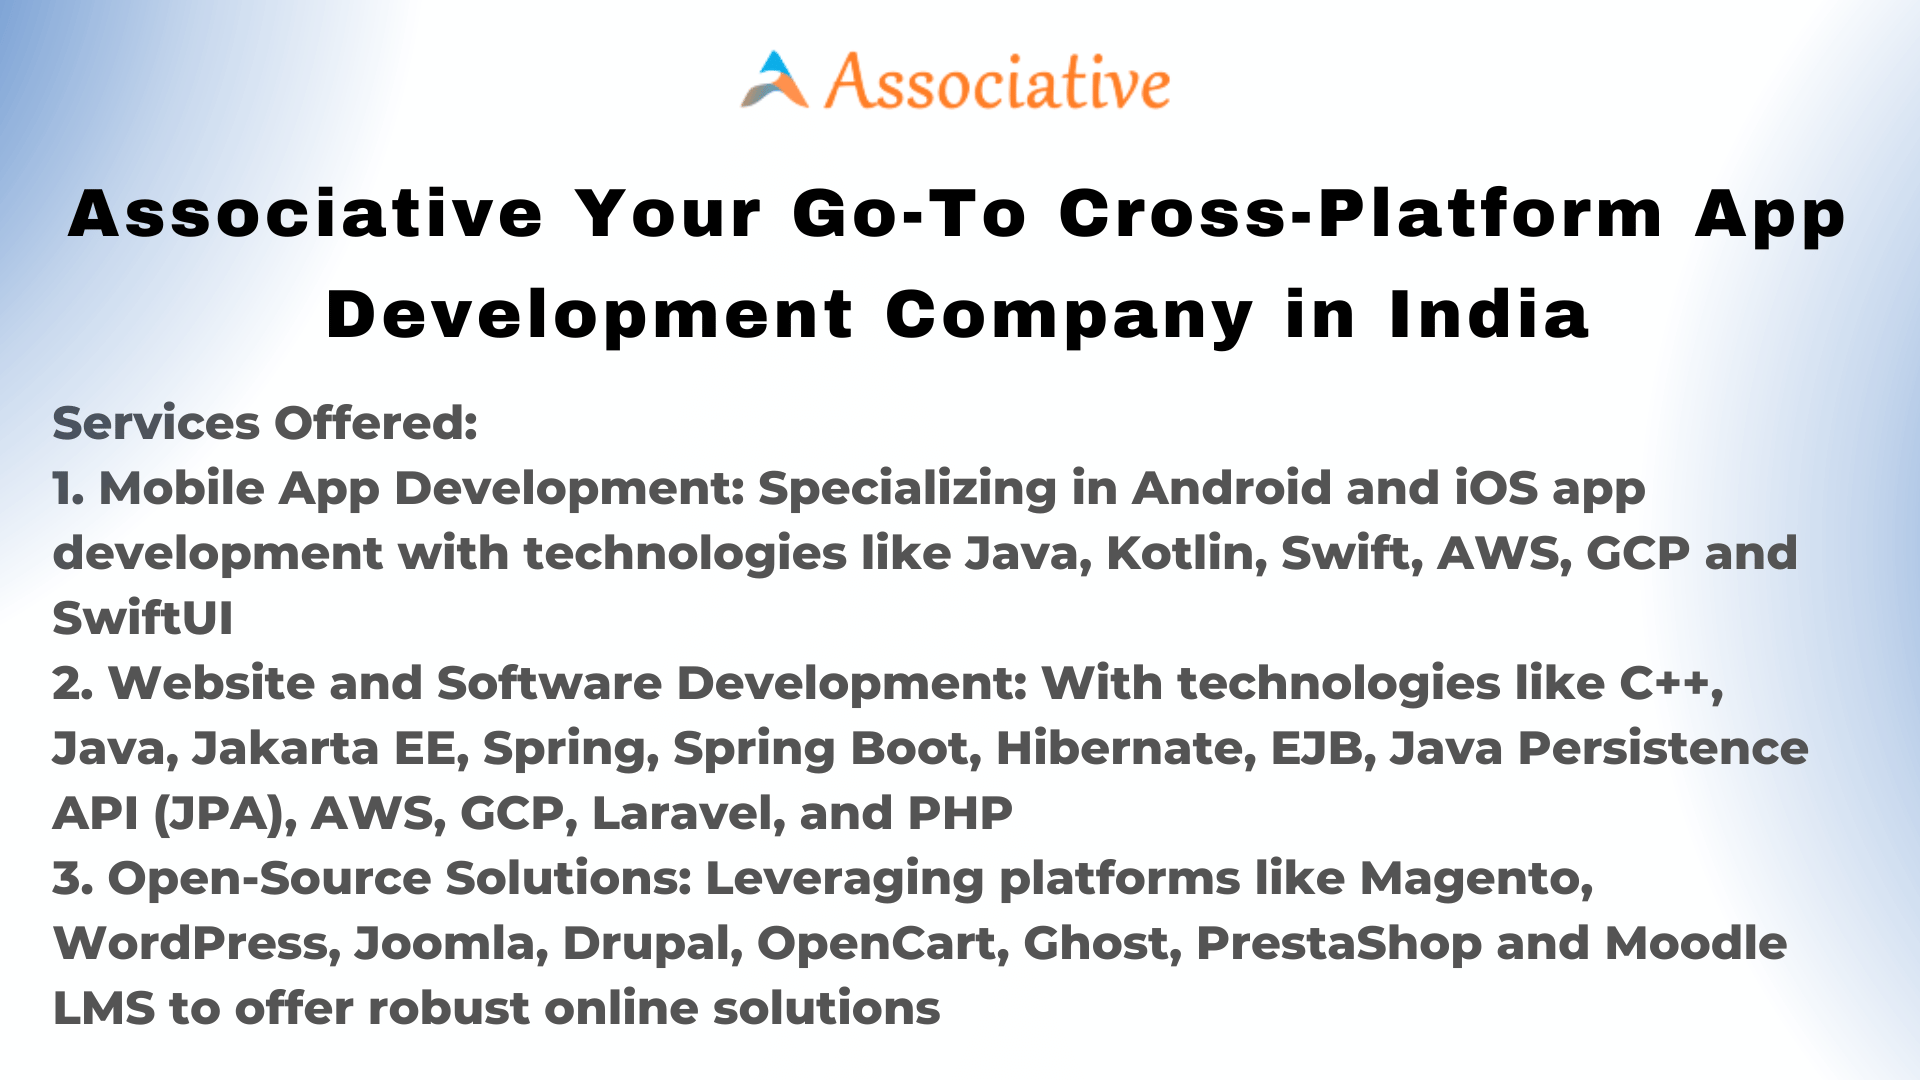 Associative Your Go-To Cross-Platform App Development Company in India